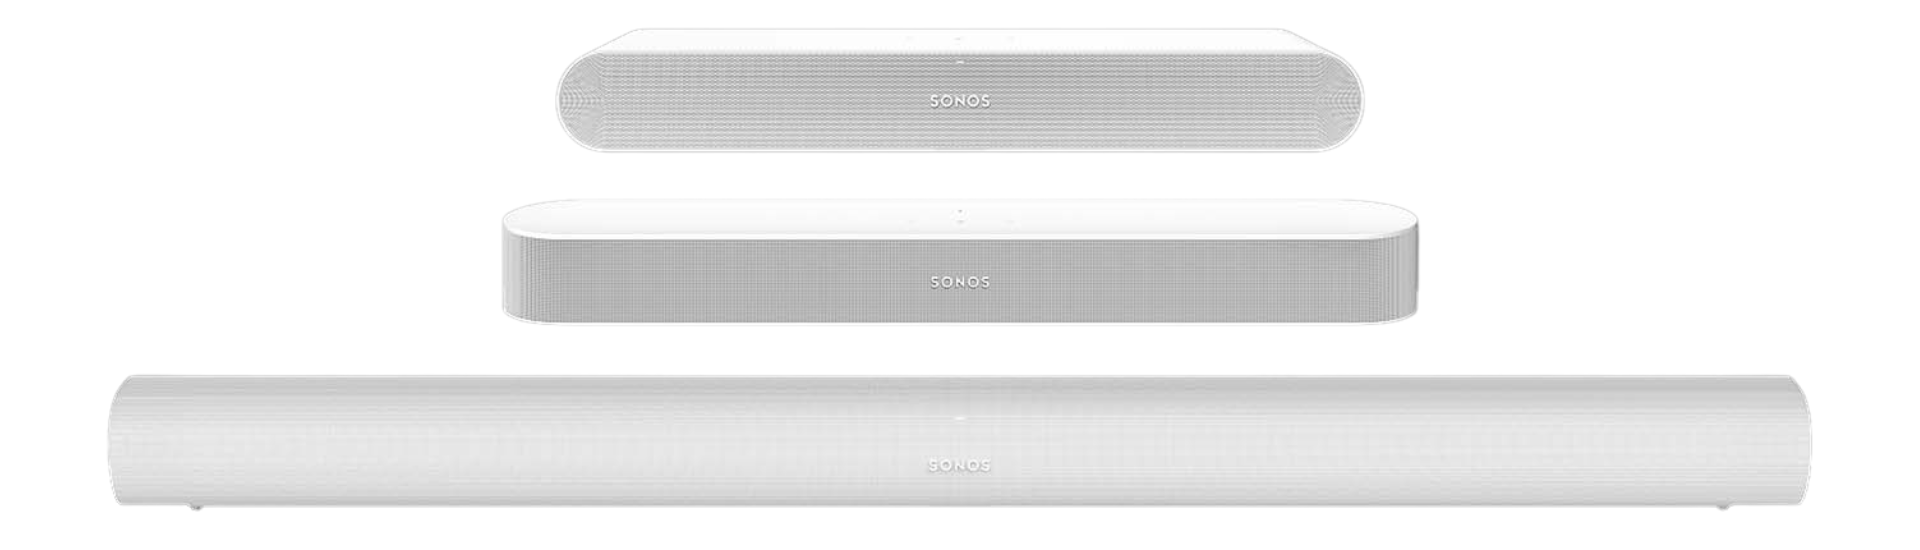 Sonos-Soundbar-Comparisons-Ray-Beam-Arc-White